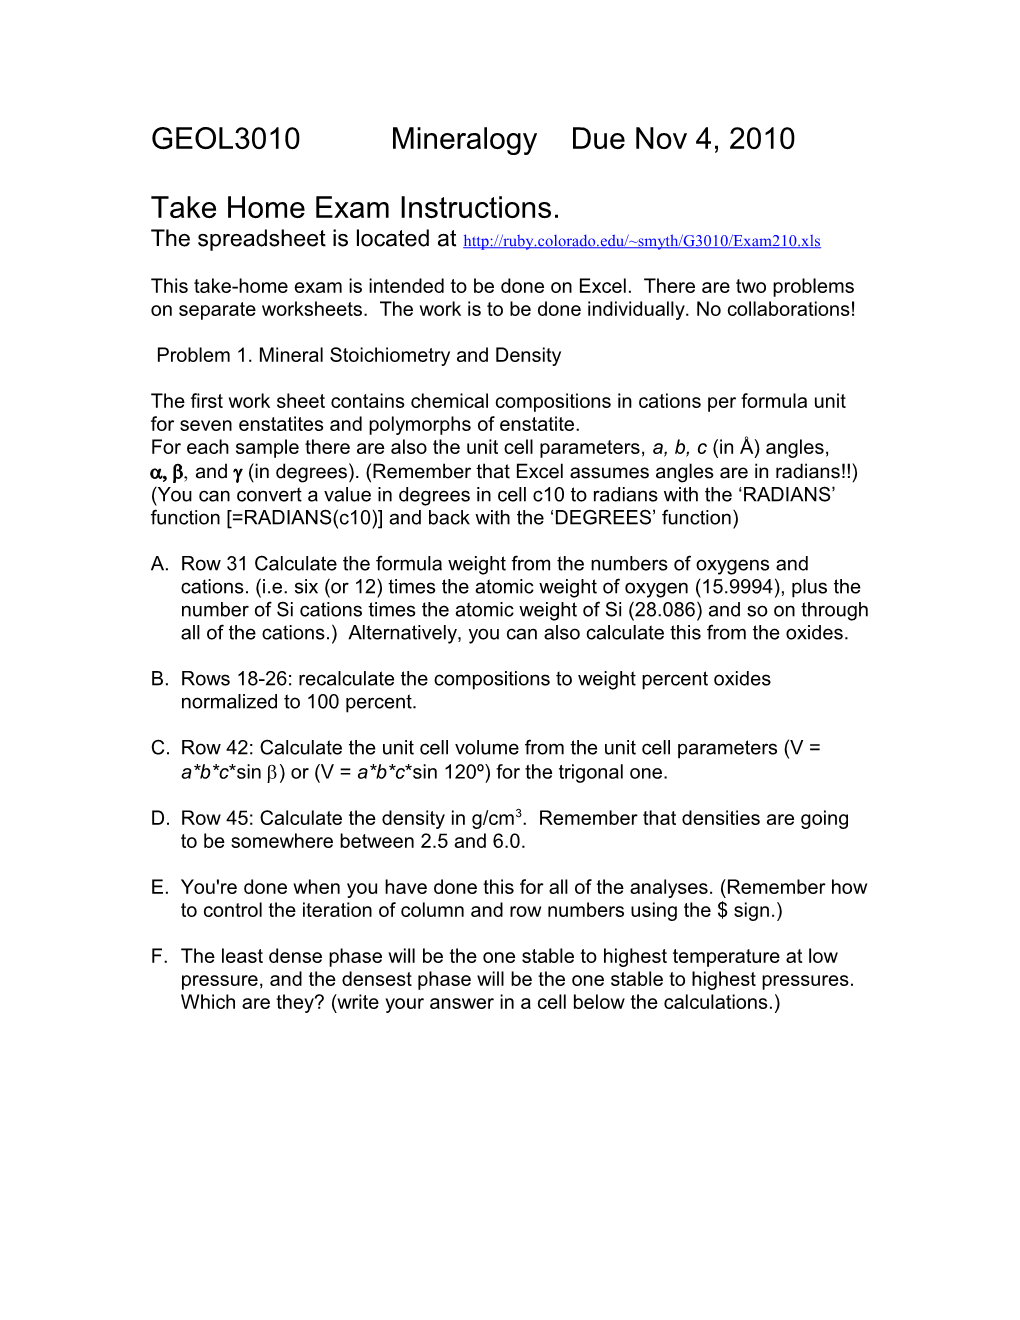 Take Home Exam Instructions